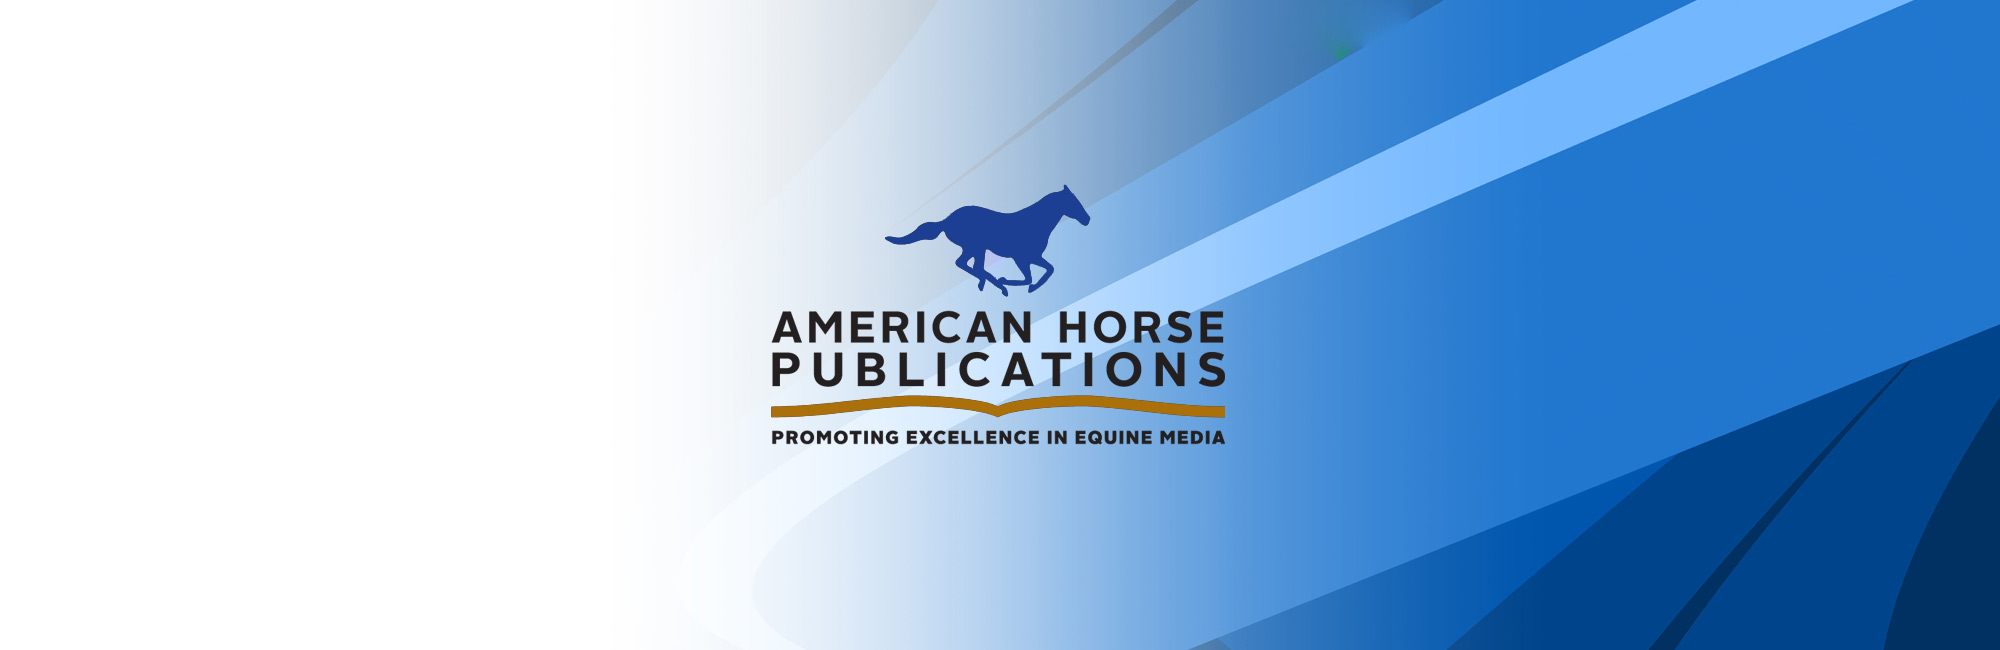 American Horse Publications header